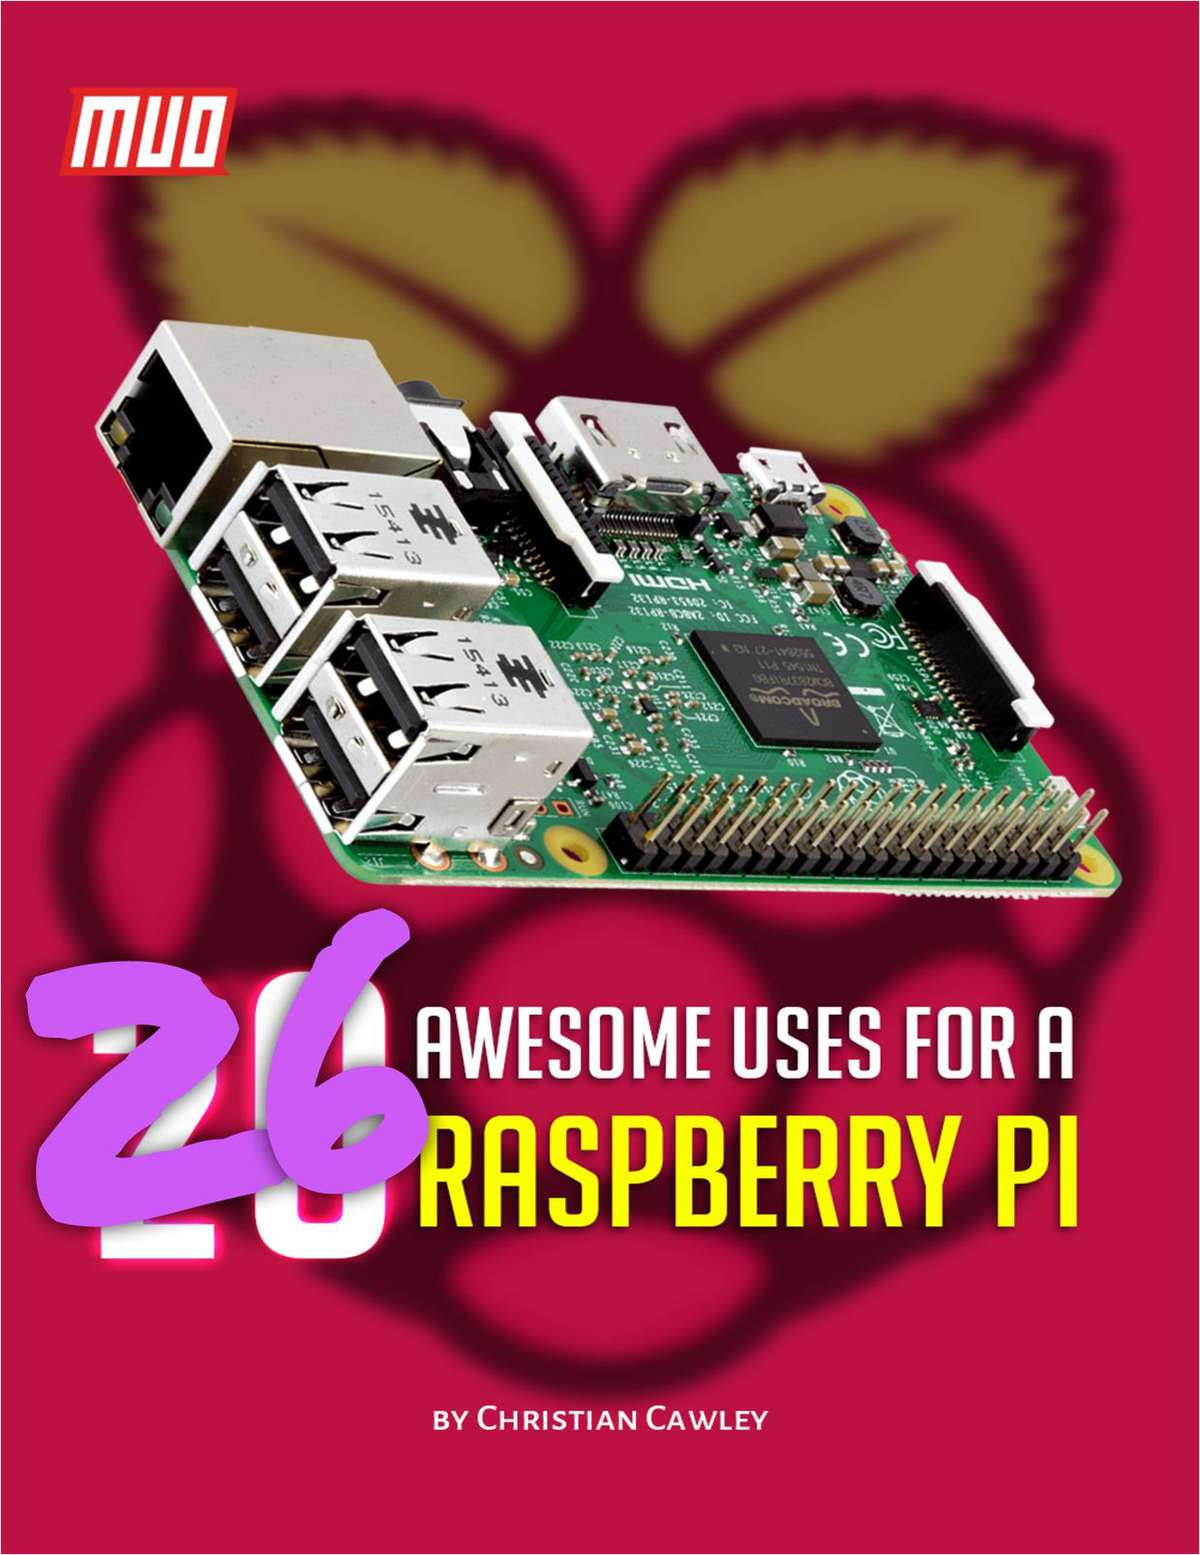 w make386c8 - 26 Awesome Uses for a Raspberry Pi